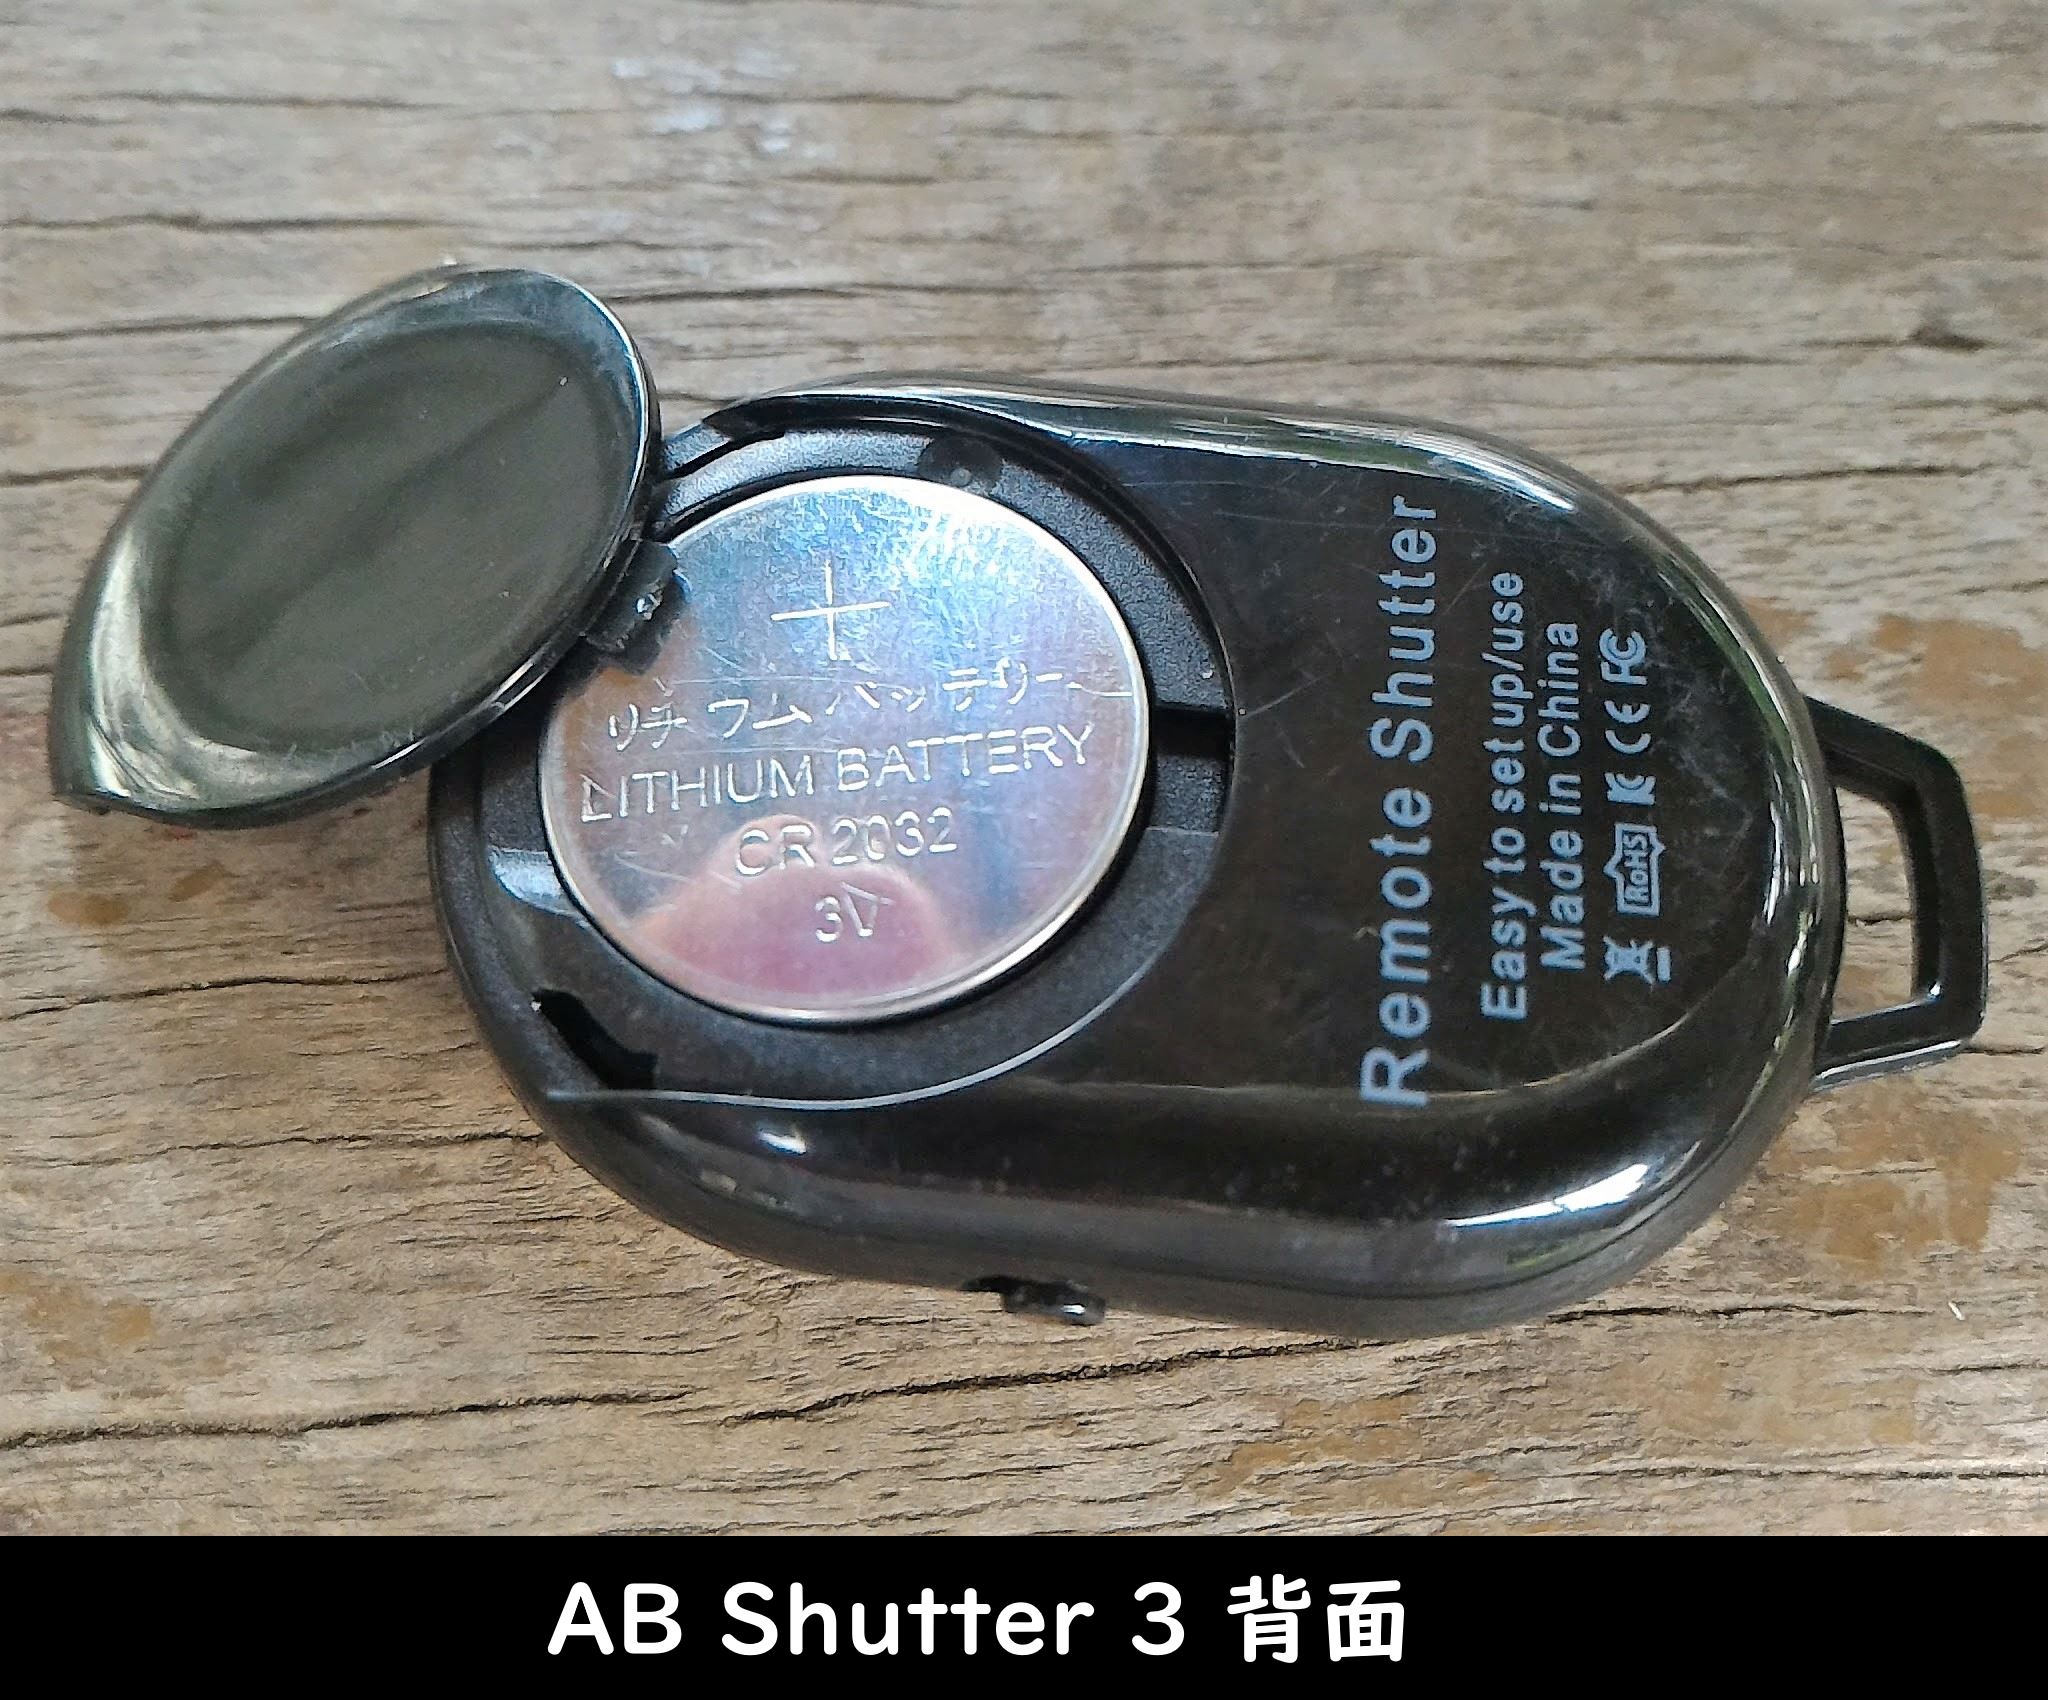 AB Shutter 3 (Bluetooth Remote Shutter) 背面